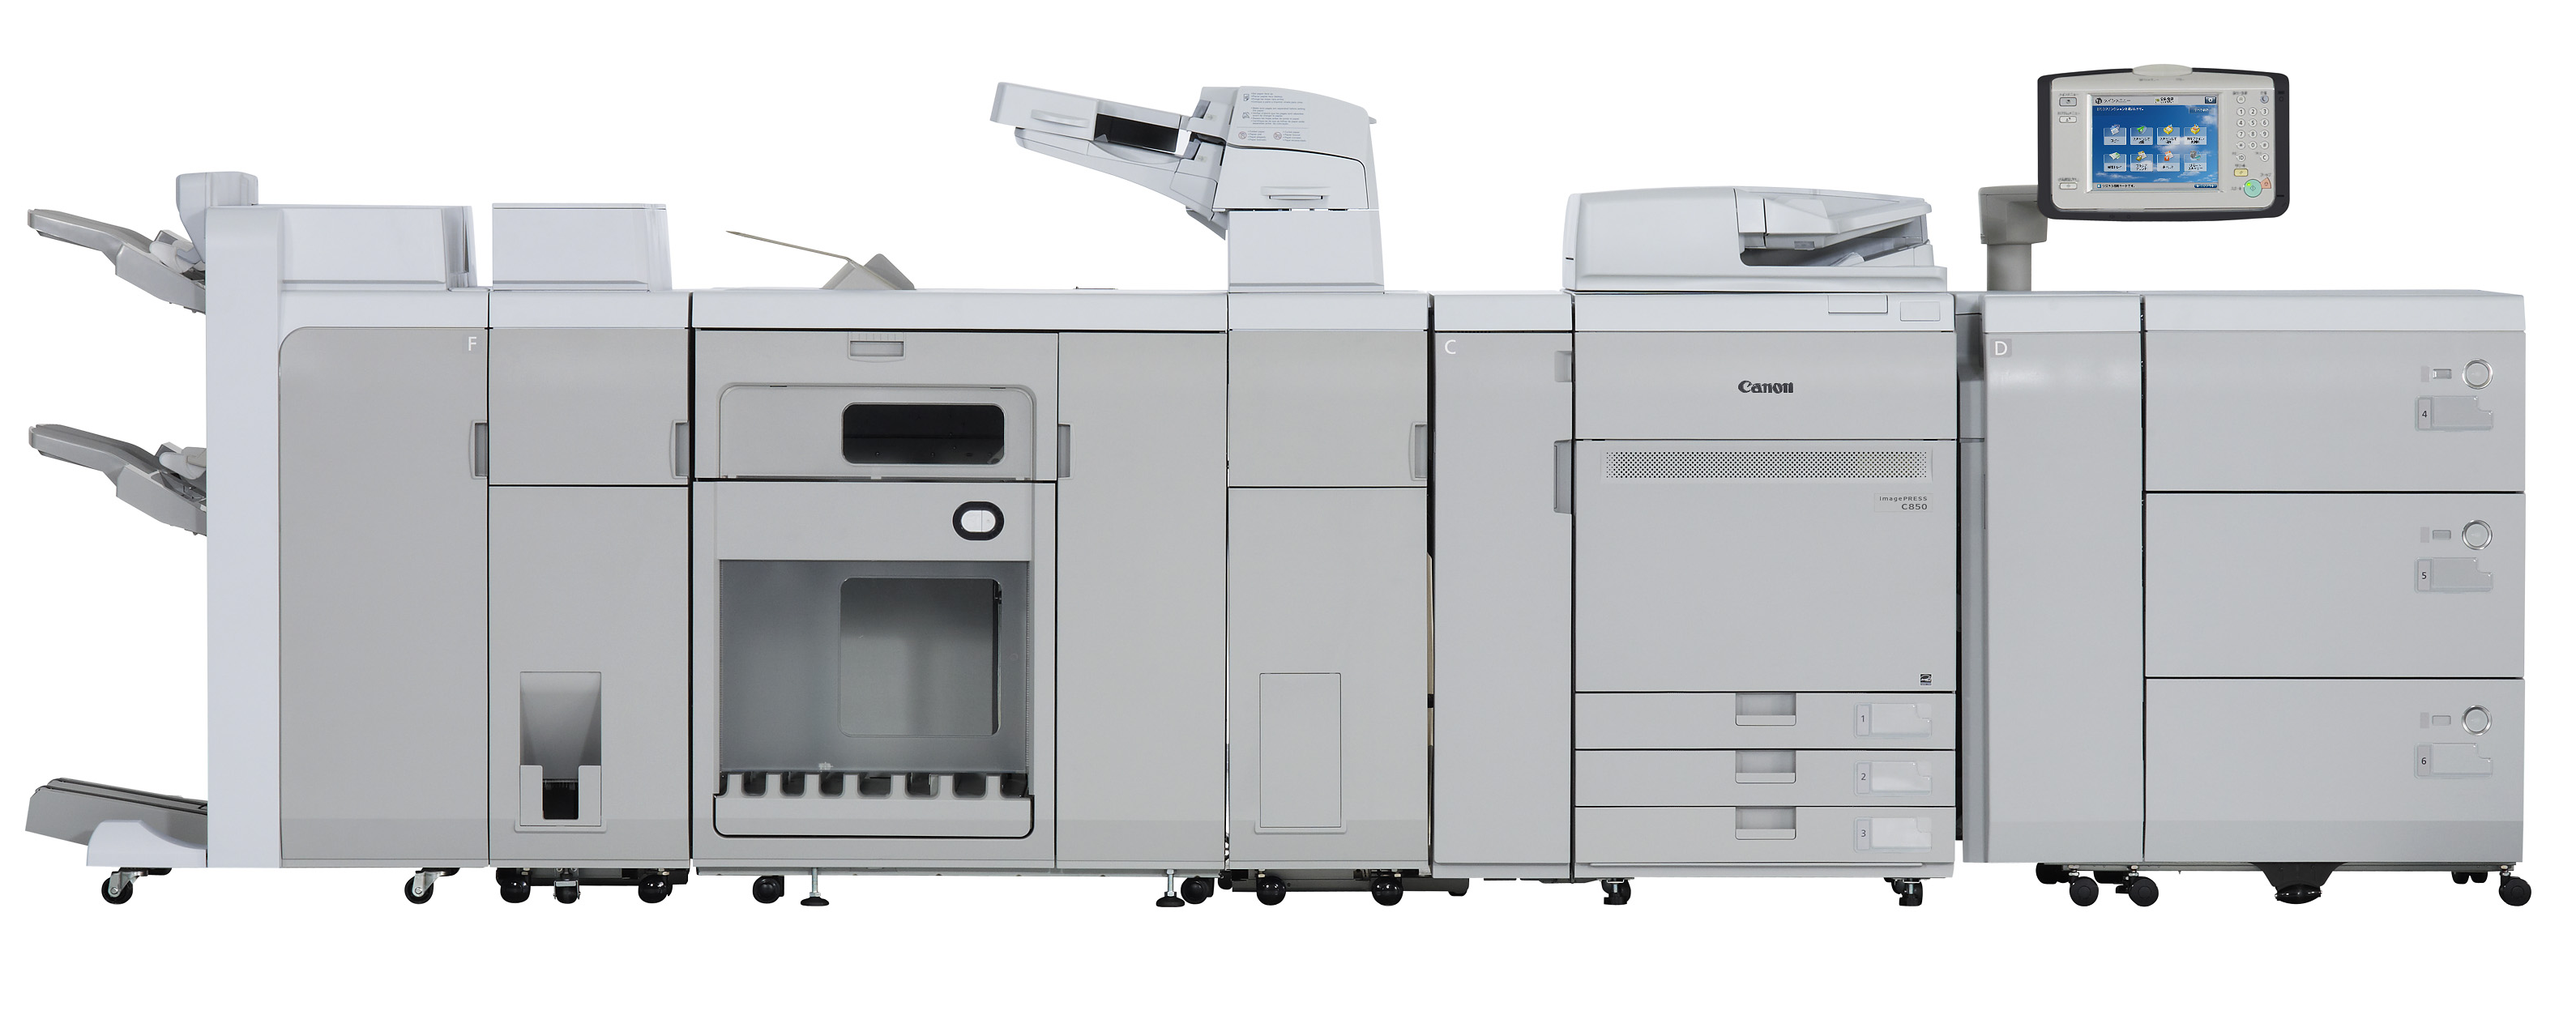 Canon imagePRESS Production Printers